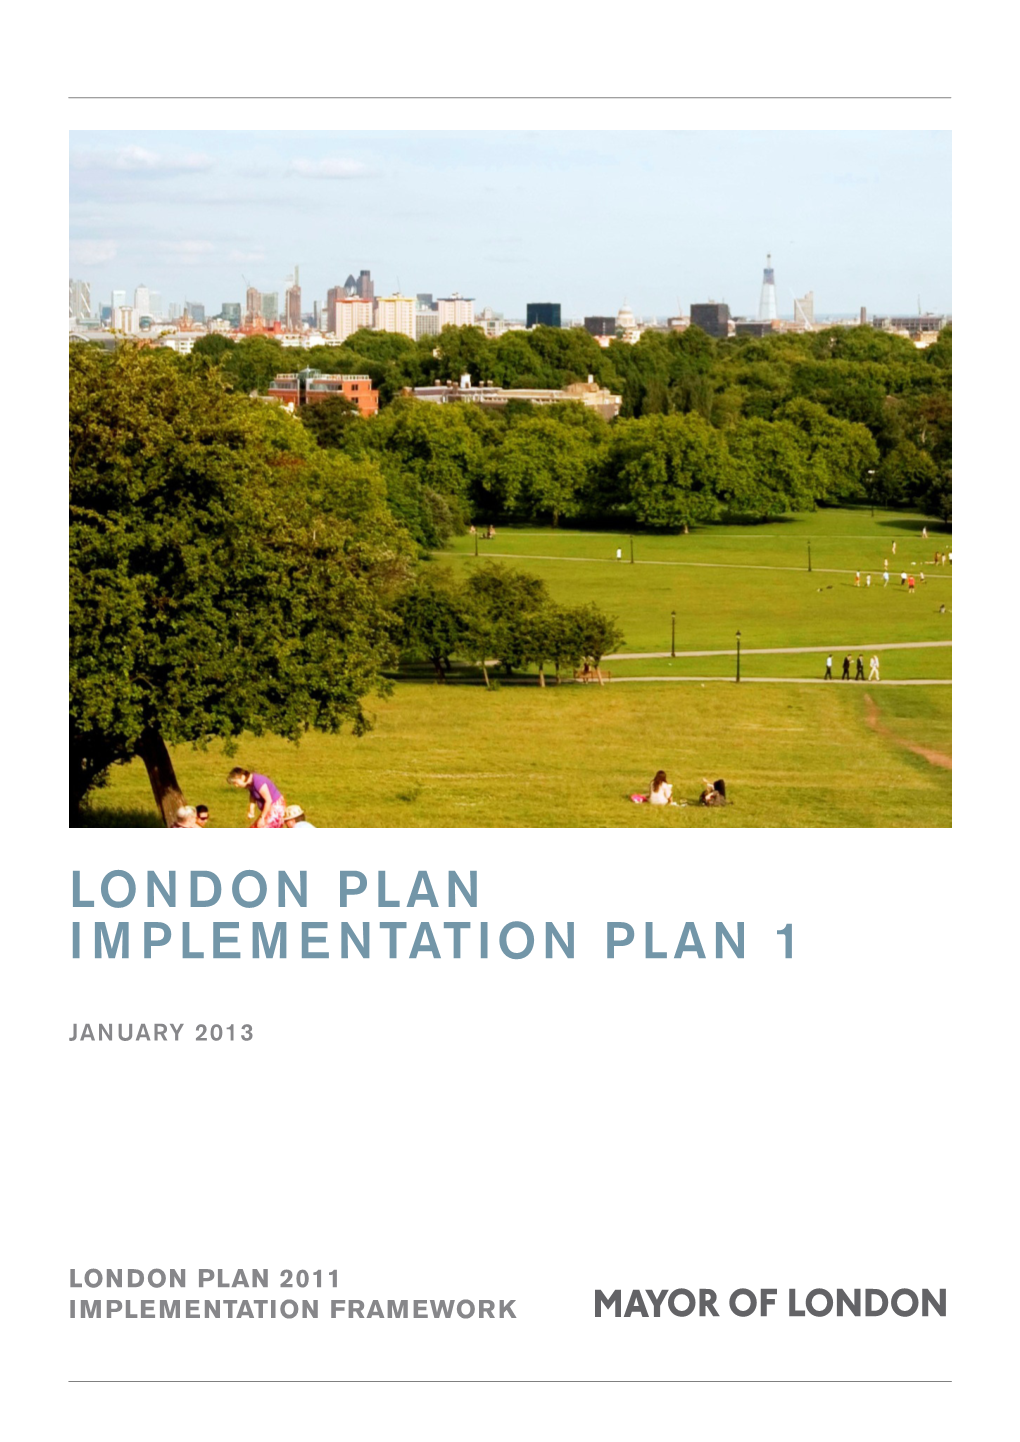 The London Plan Implementation Plan 1